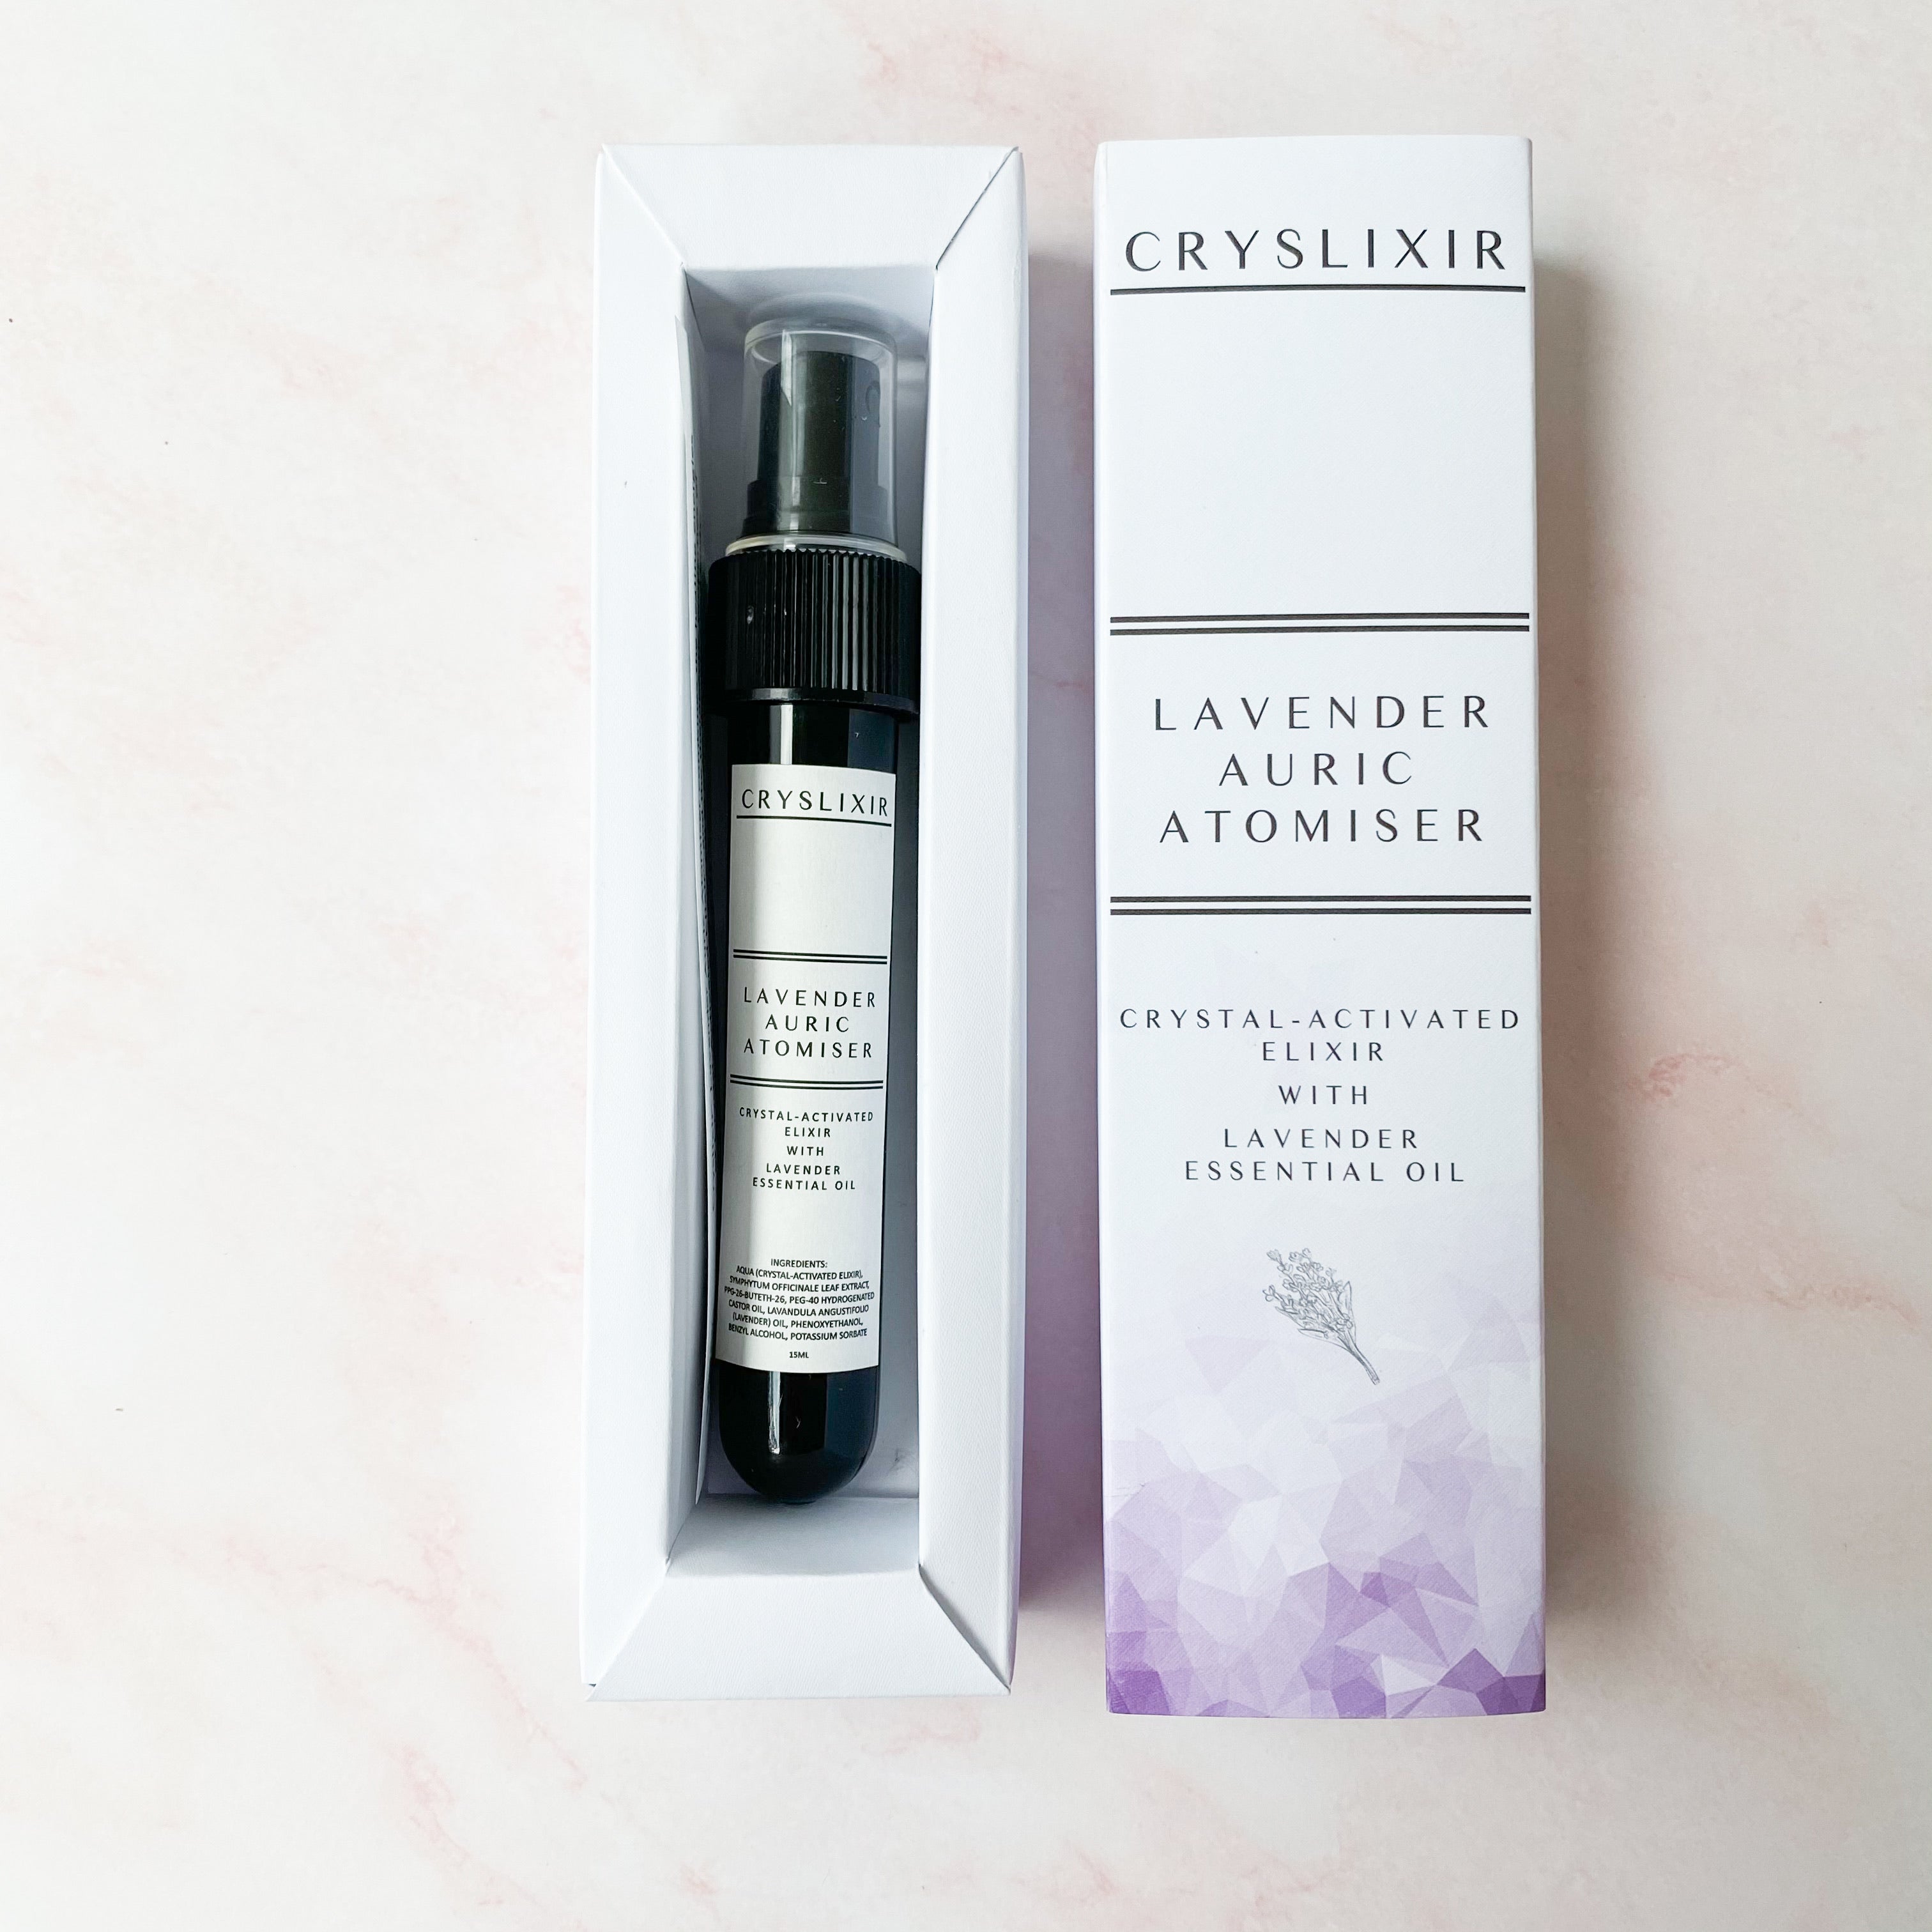 Cryslixir Lavender Auric Atomiser